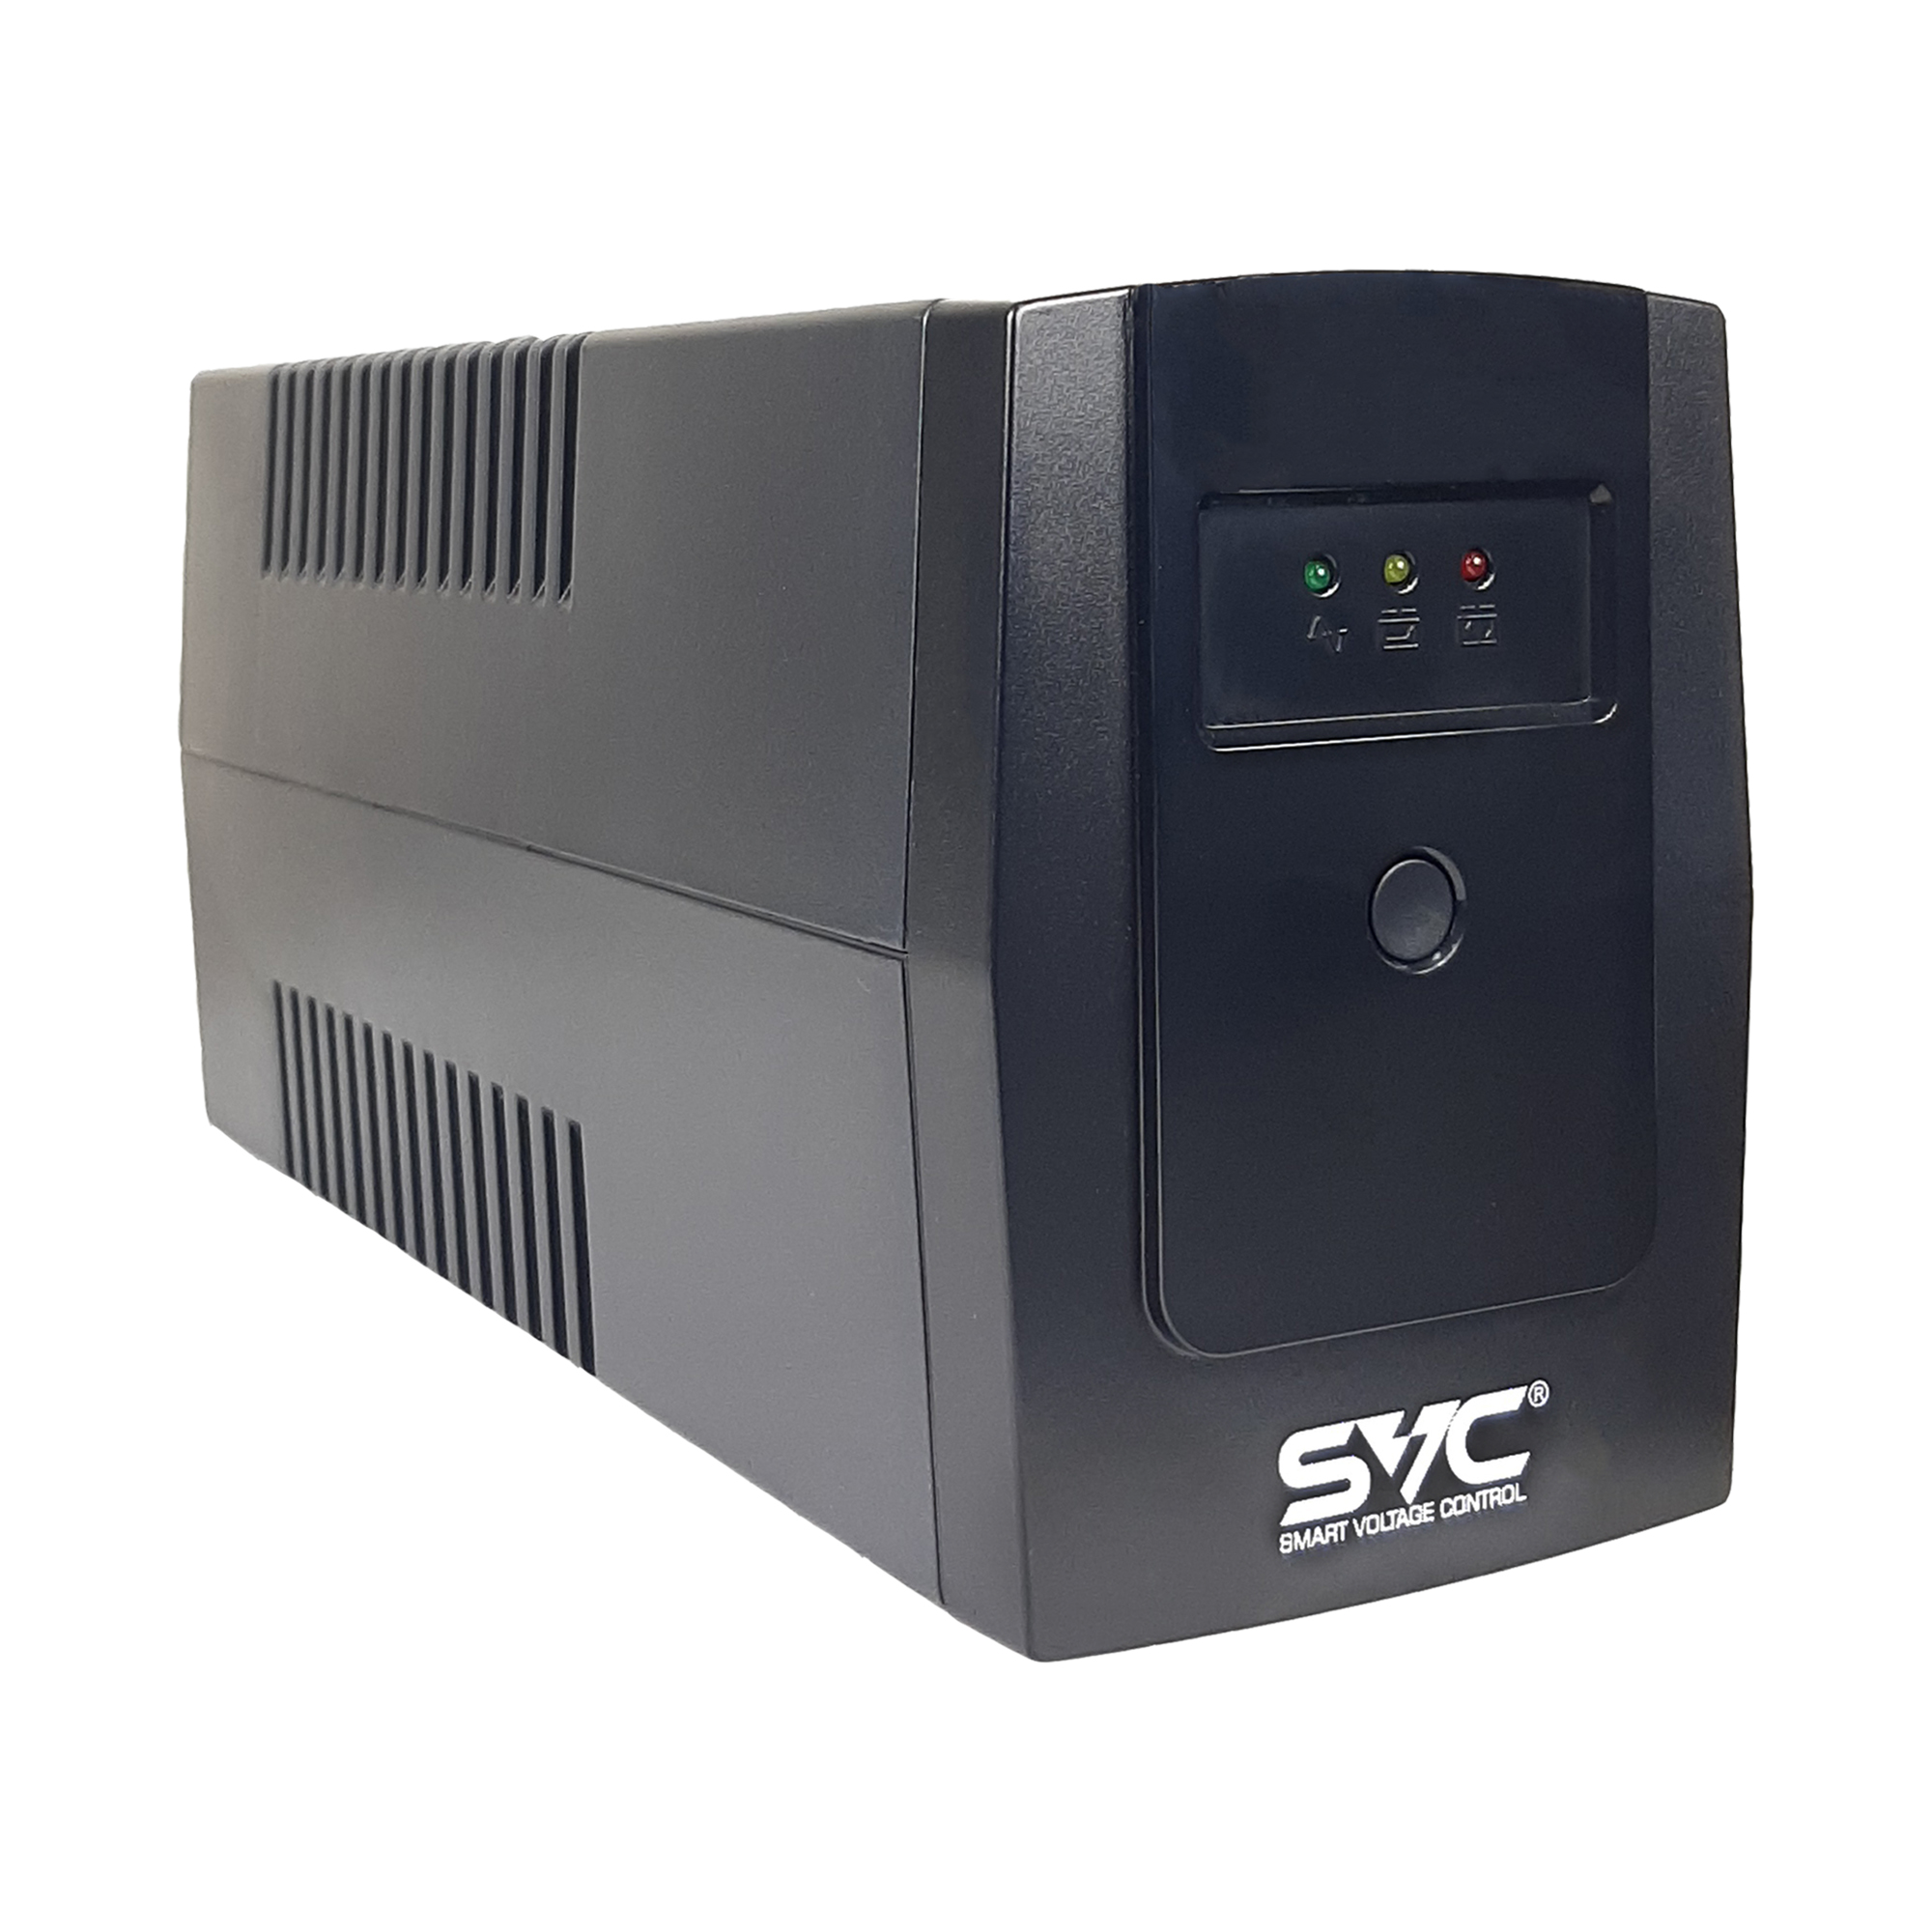 ИБП SVC V-800-R, 800VA, 480W, EURO, розеток - 2, черный (V-800-R)